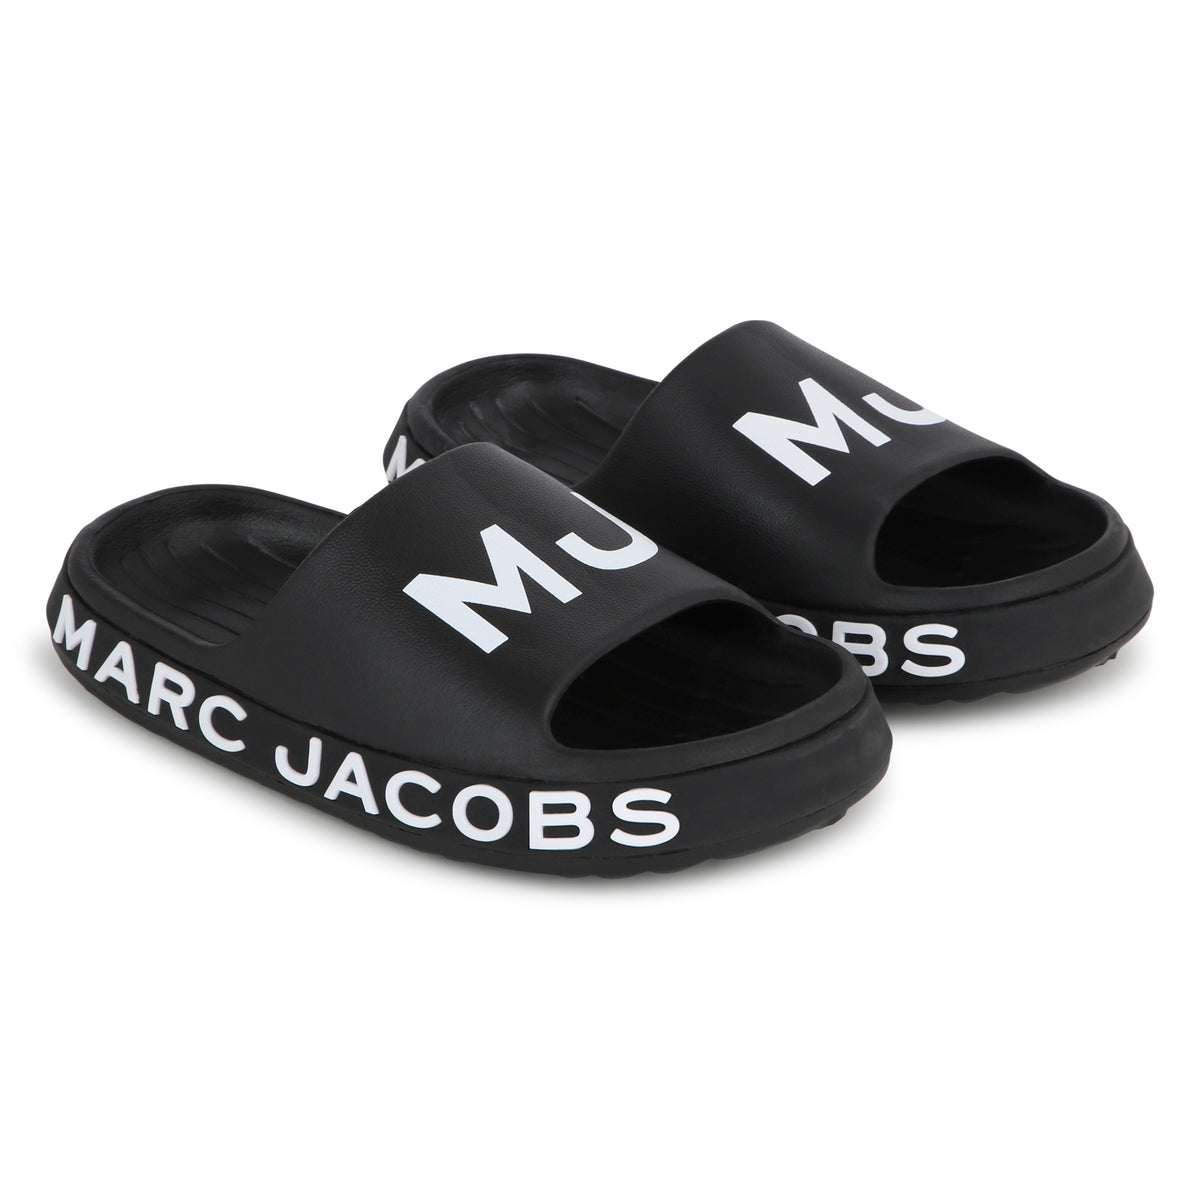 Marc Jacobs Black Branded Sliders